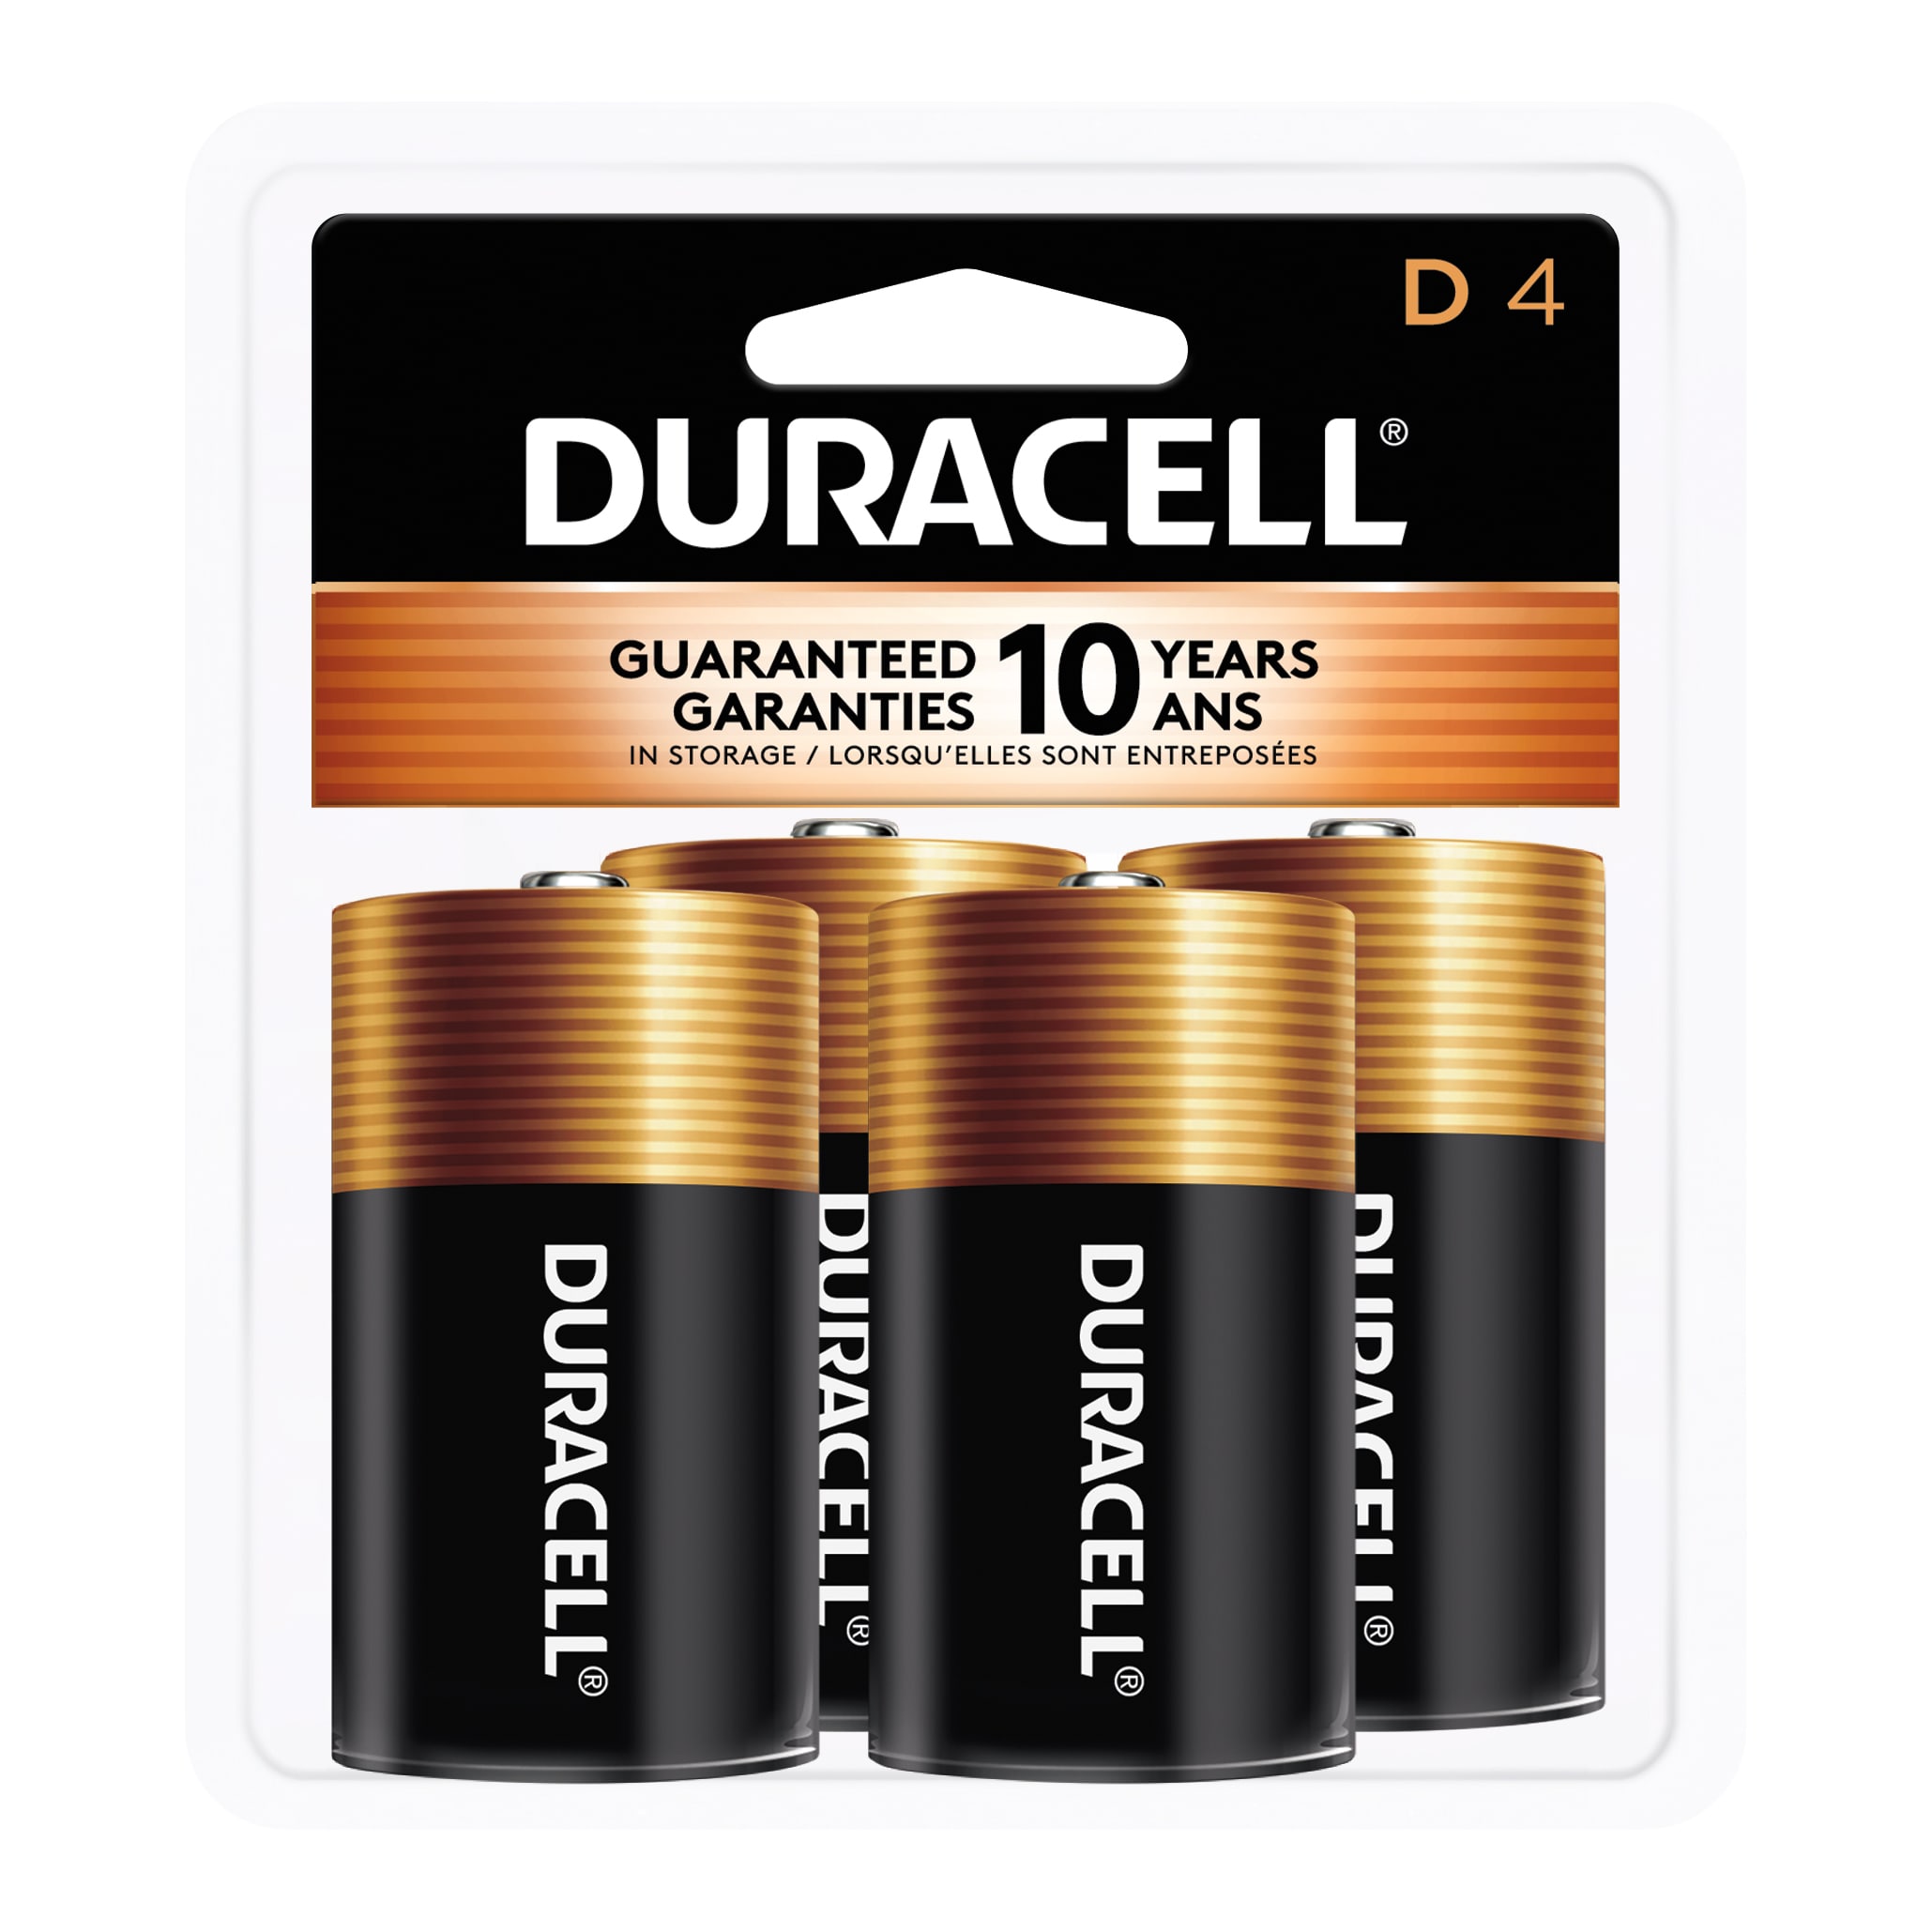 Duracell Coppertop Alkaline D Batteries 14 Count 